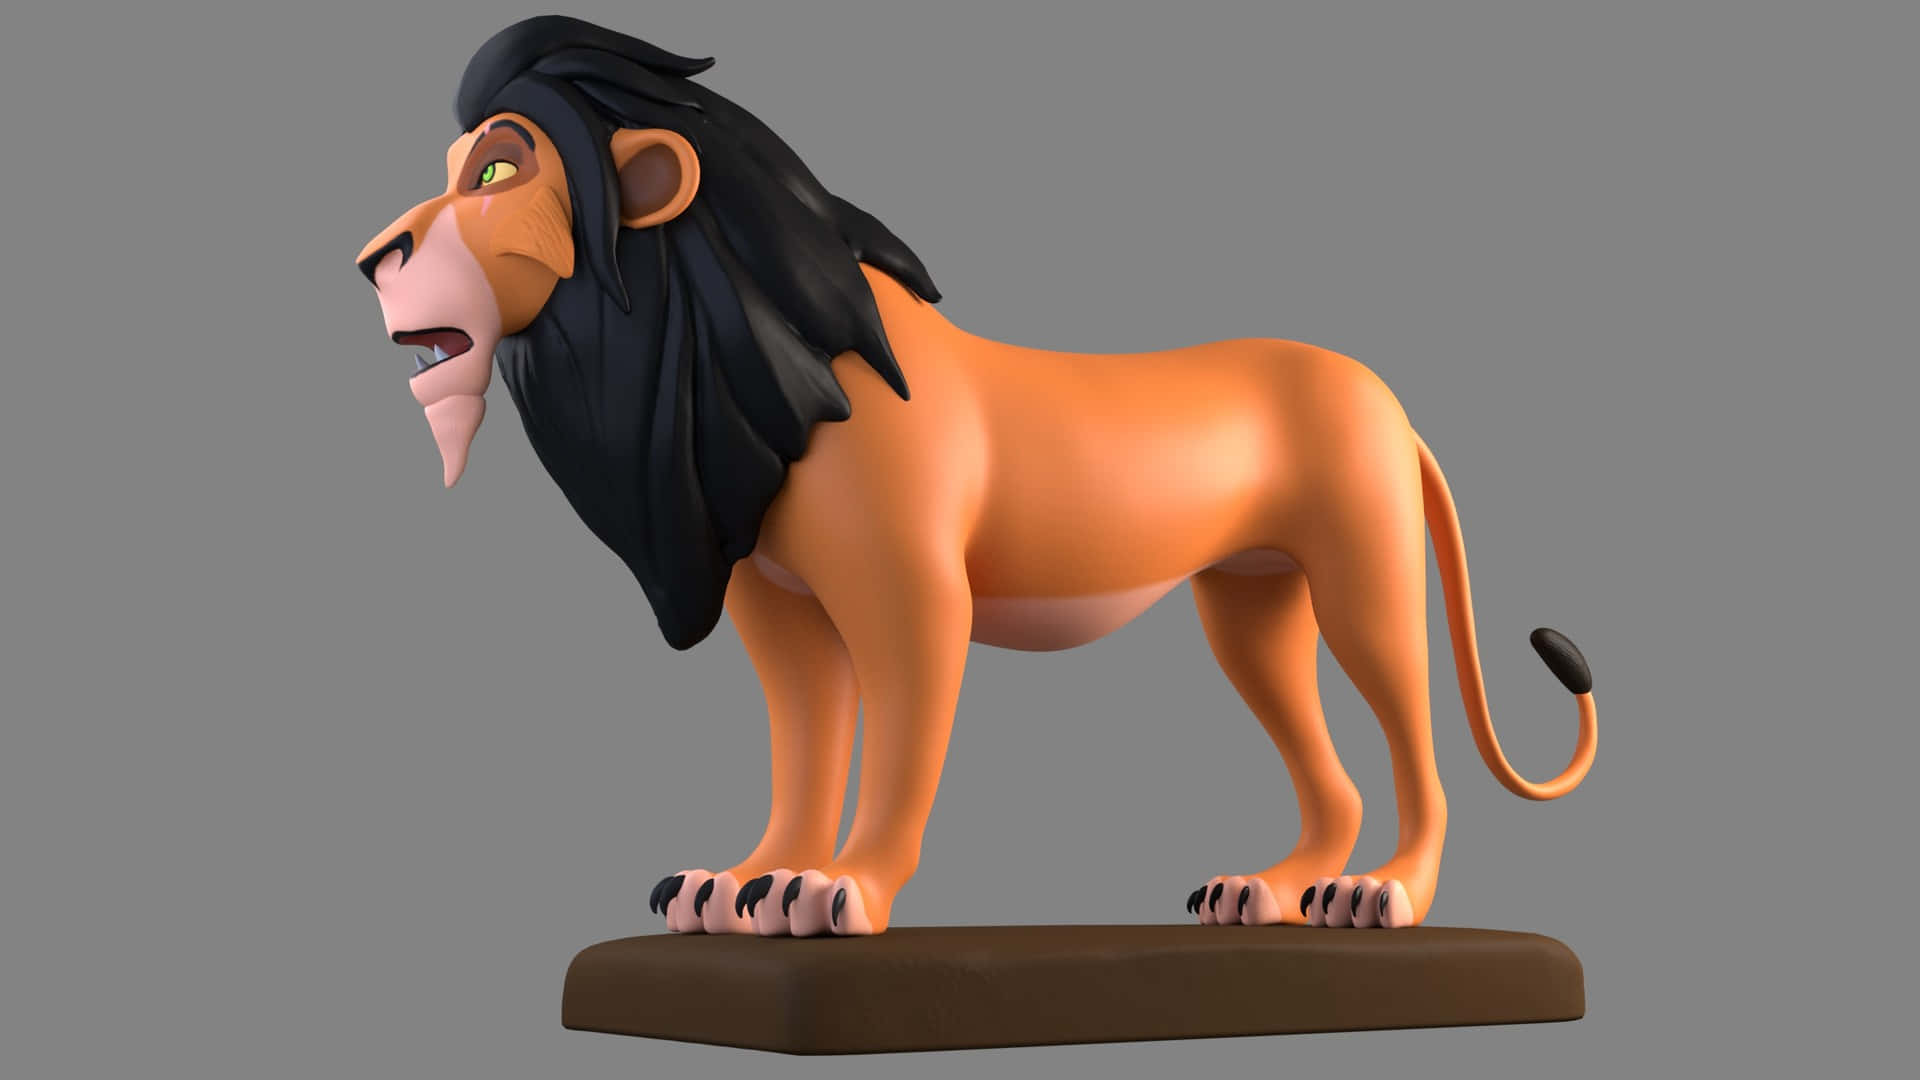 Scar, the villainous lion from Disney's Lion King. Wallpaper